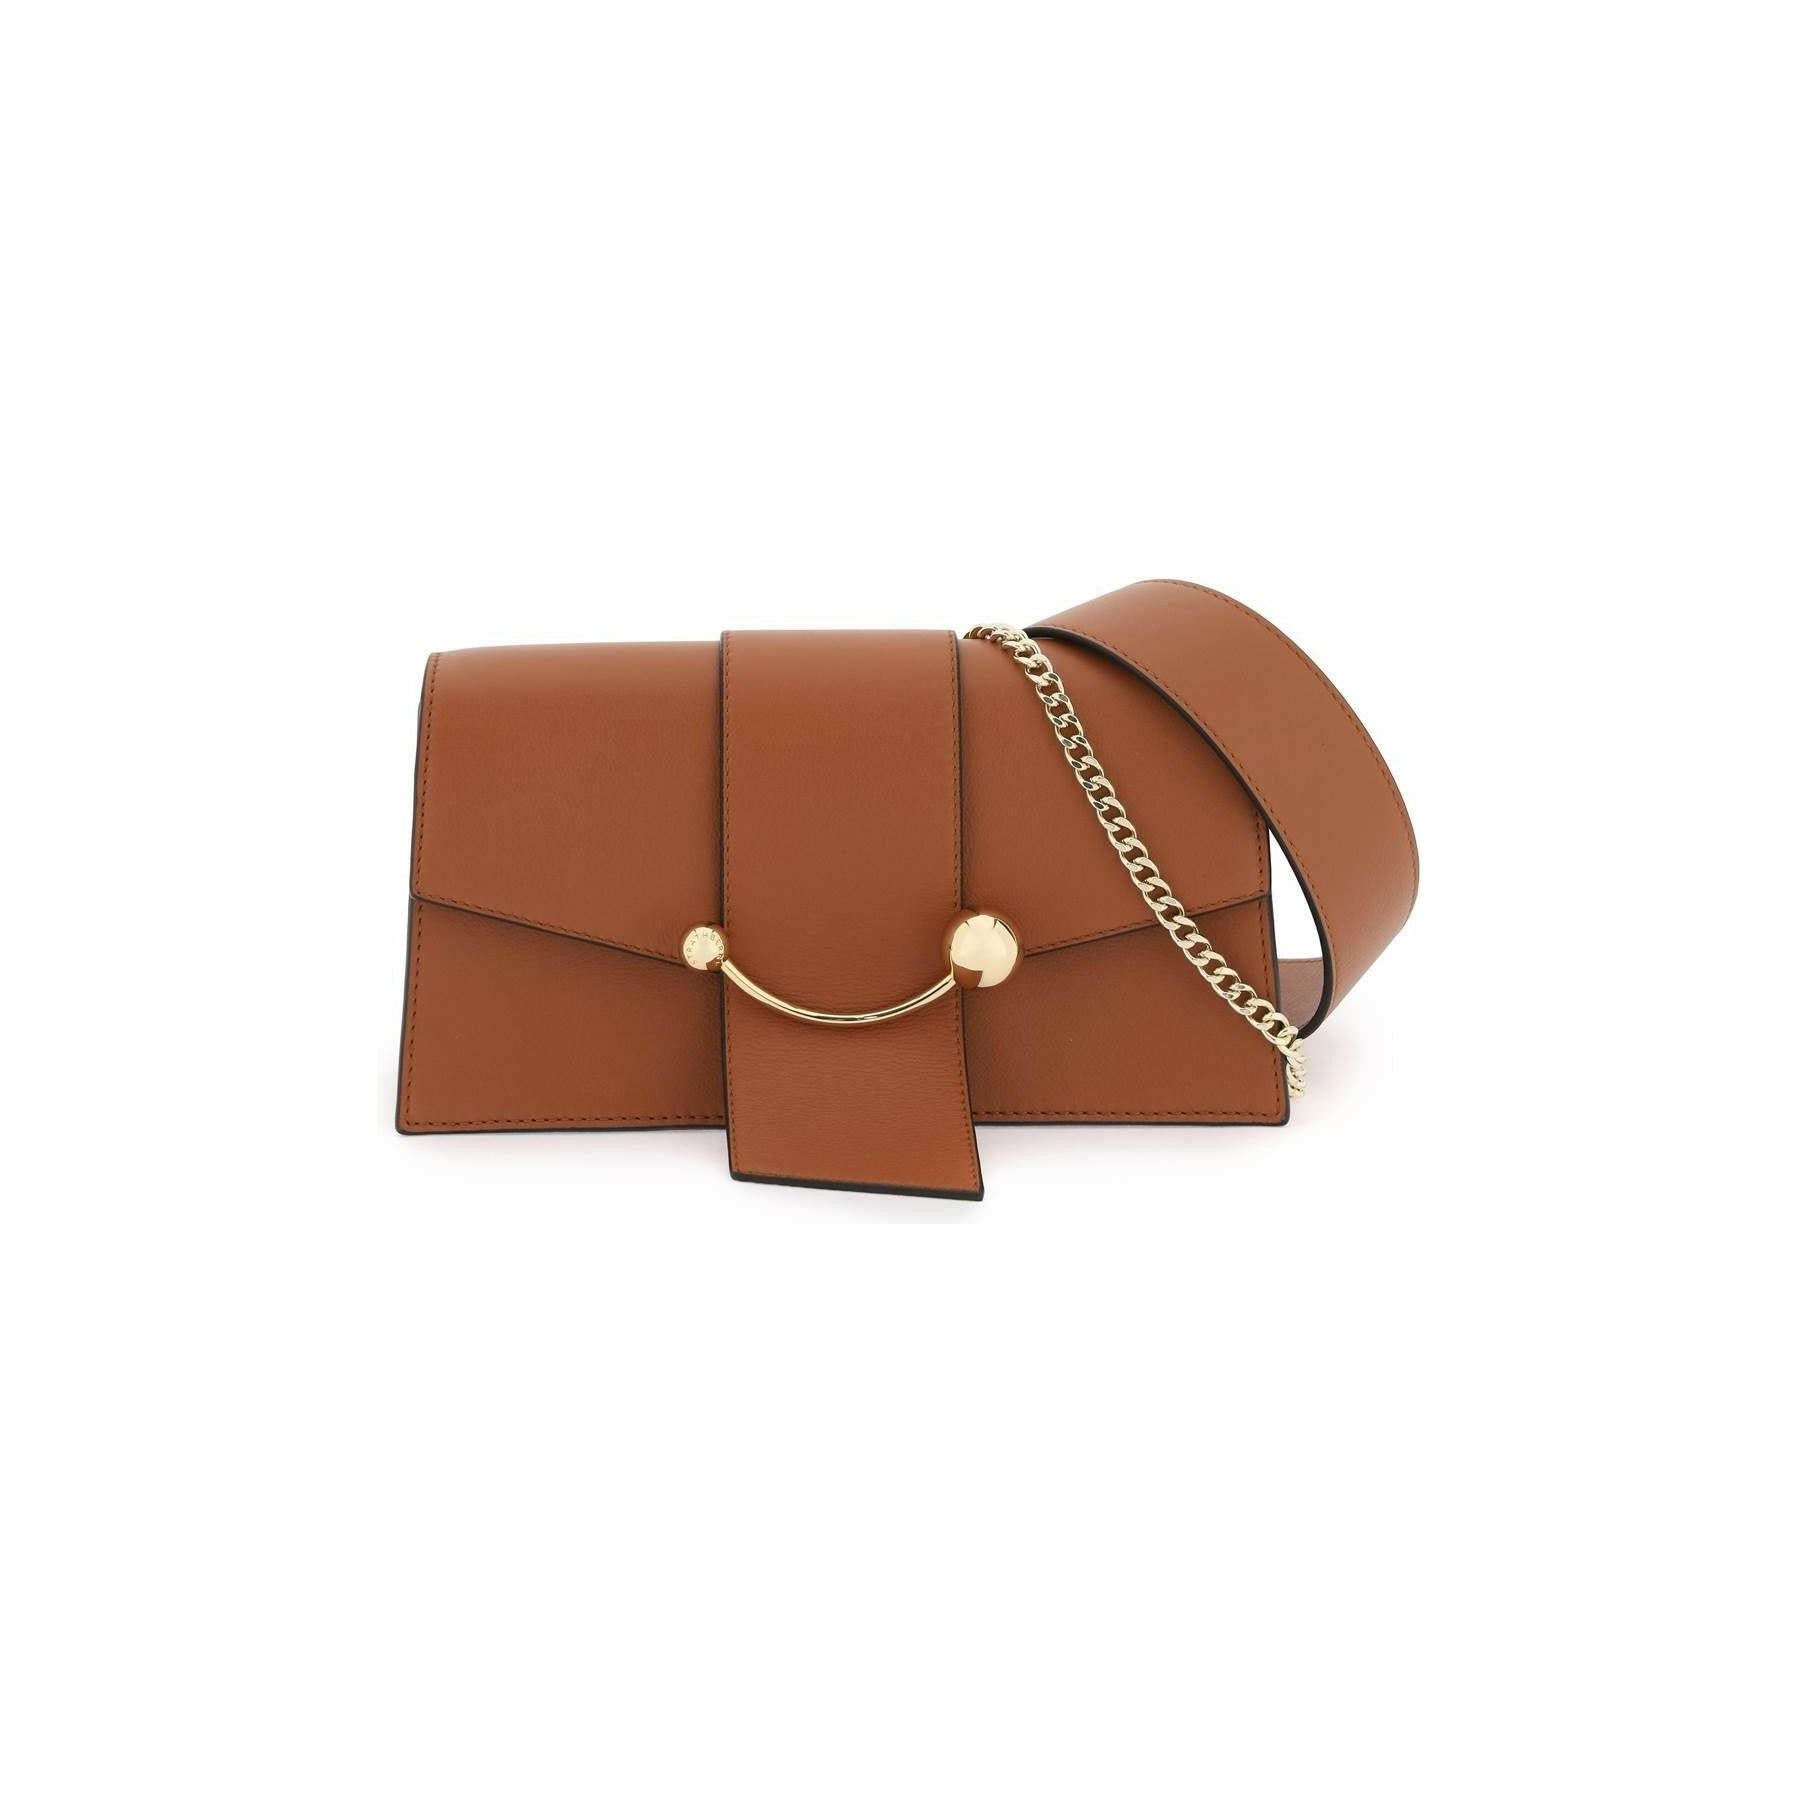 Chestnut Brown 'Mini Crescent' Leather Bag STRATHBERRY JOHN JULIA.